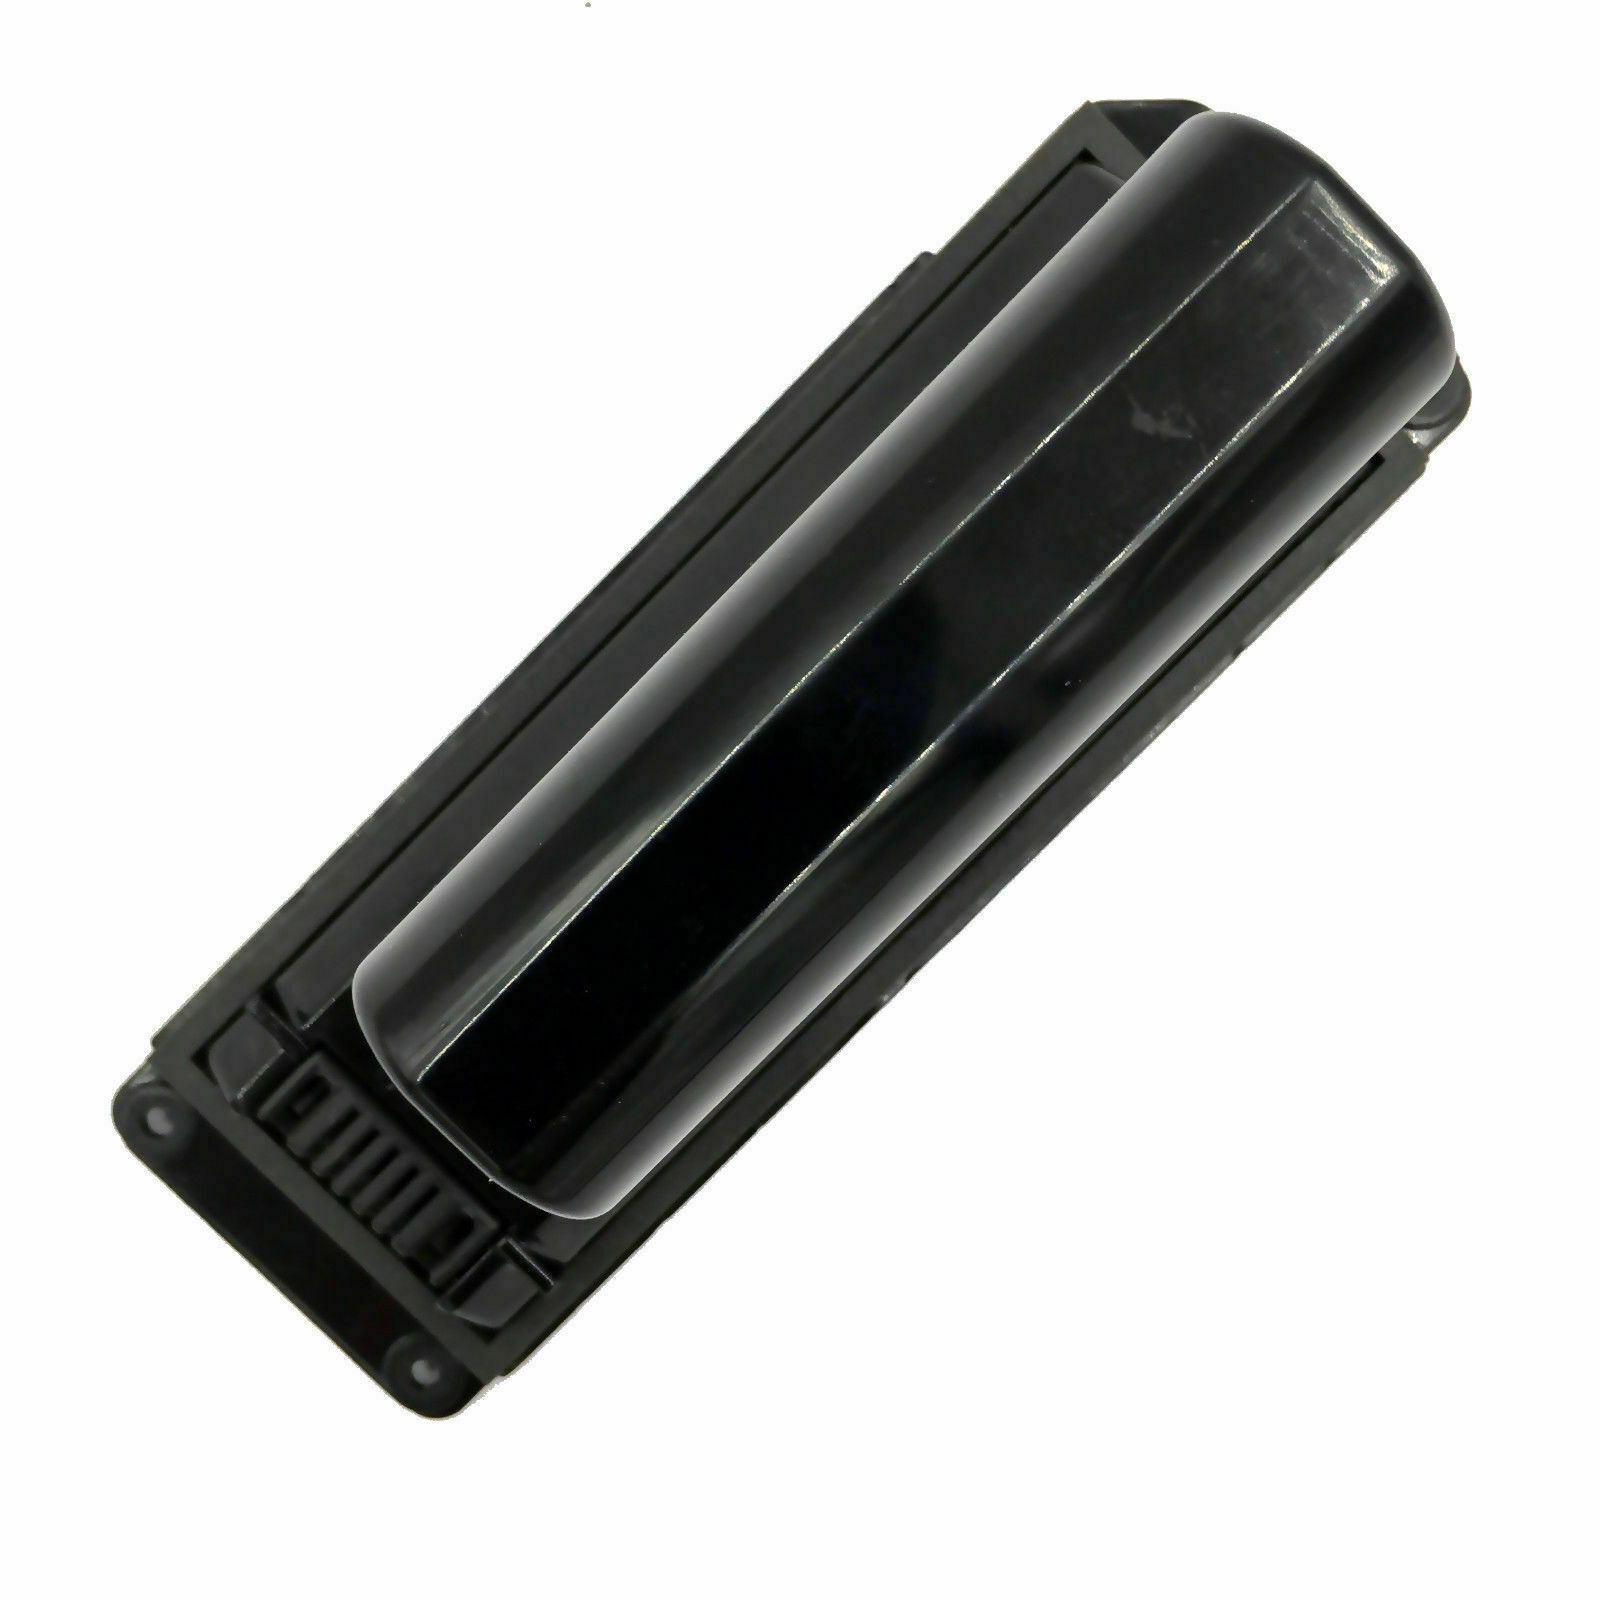 061384 061385 061386 063404 063287 for SoundLink Mini one Speaker compatible Battery